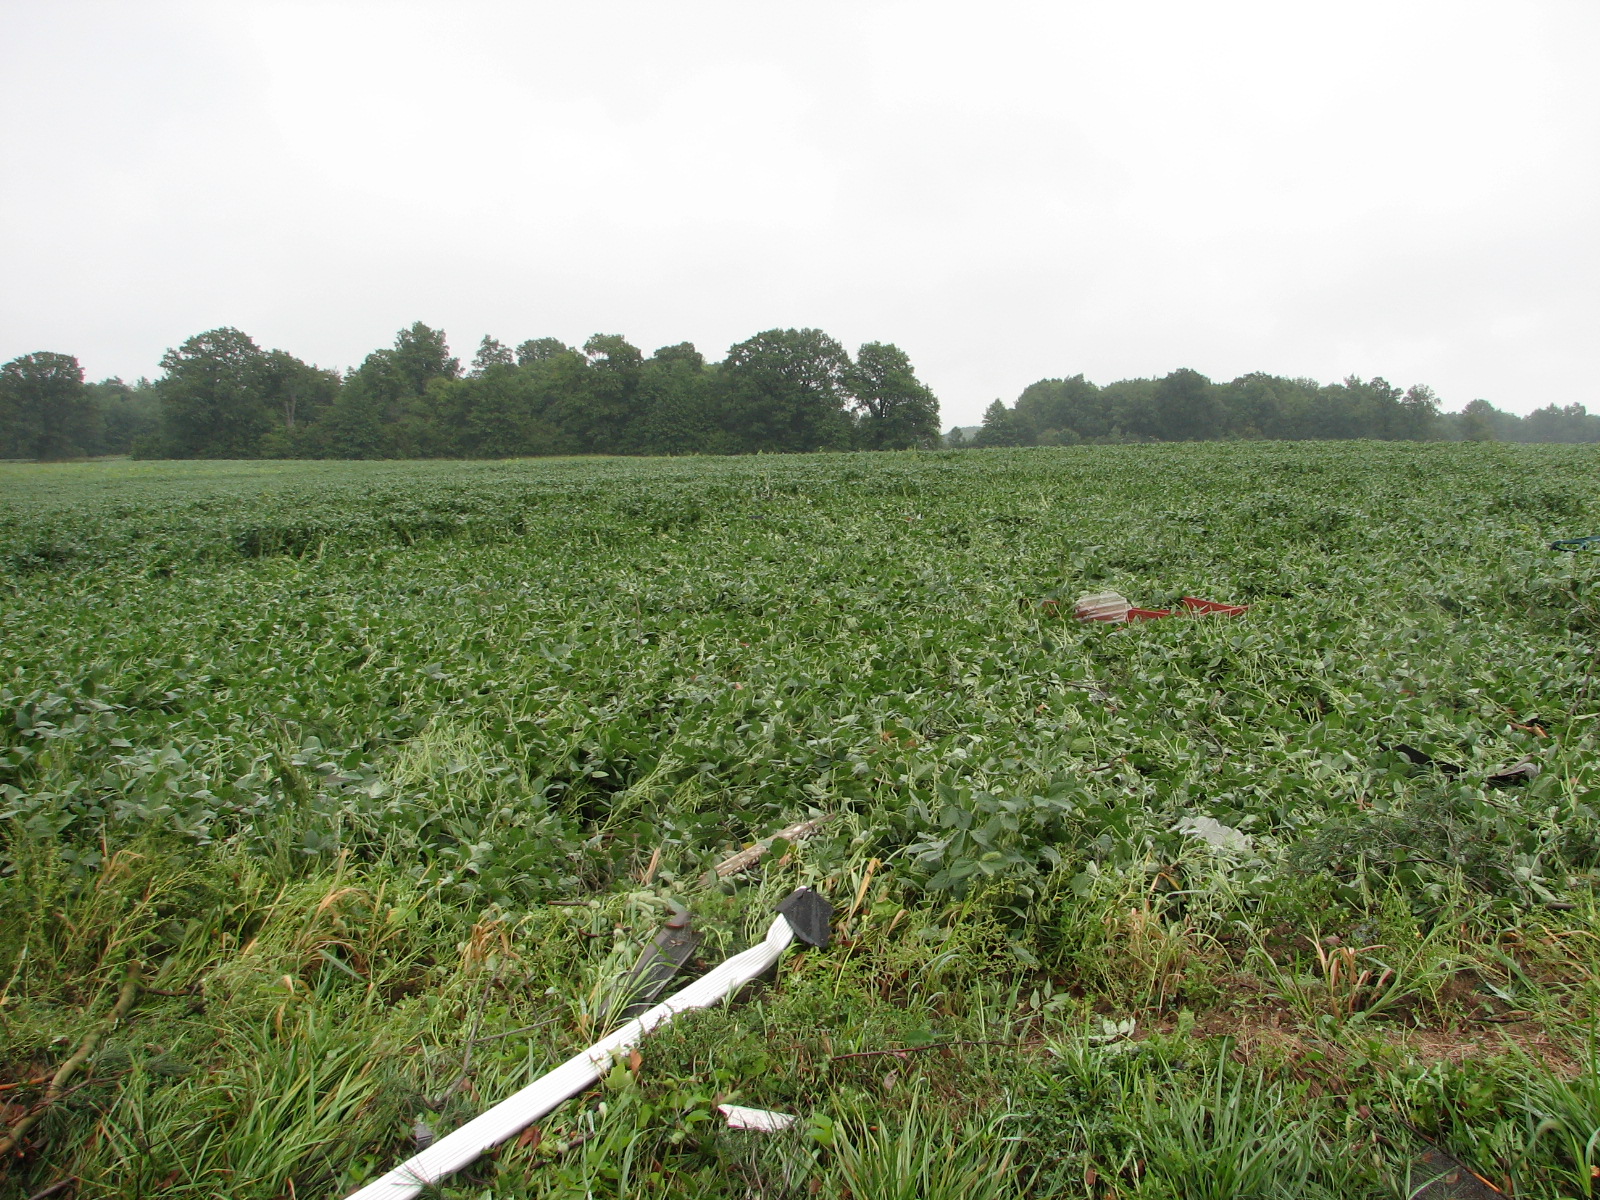 Tornado damage, soy bean crop flattened